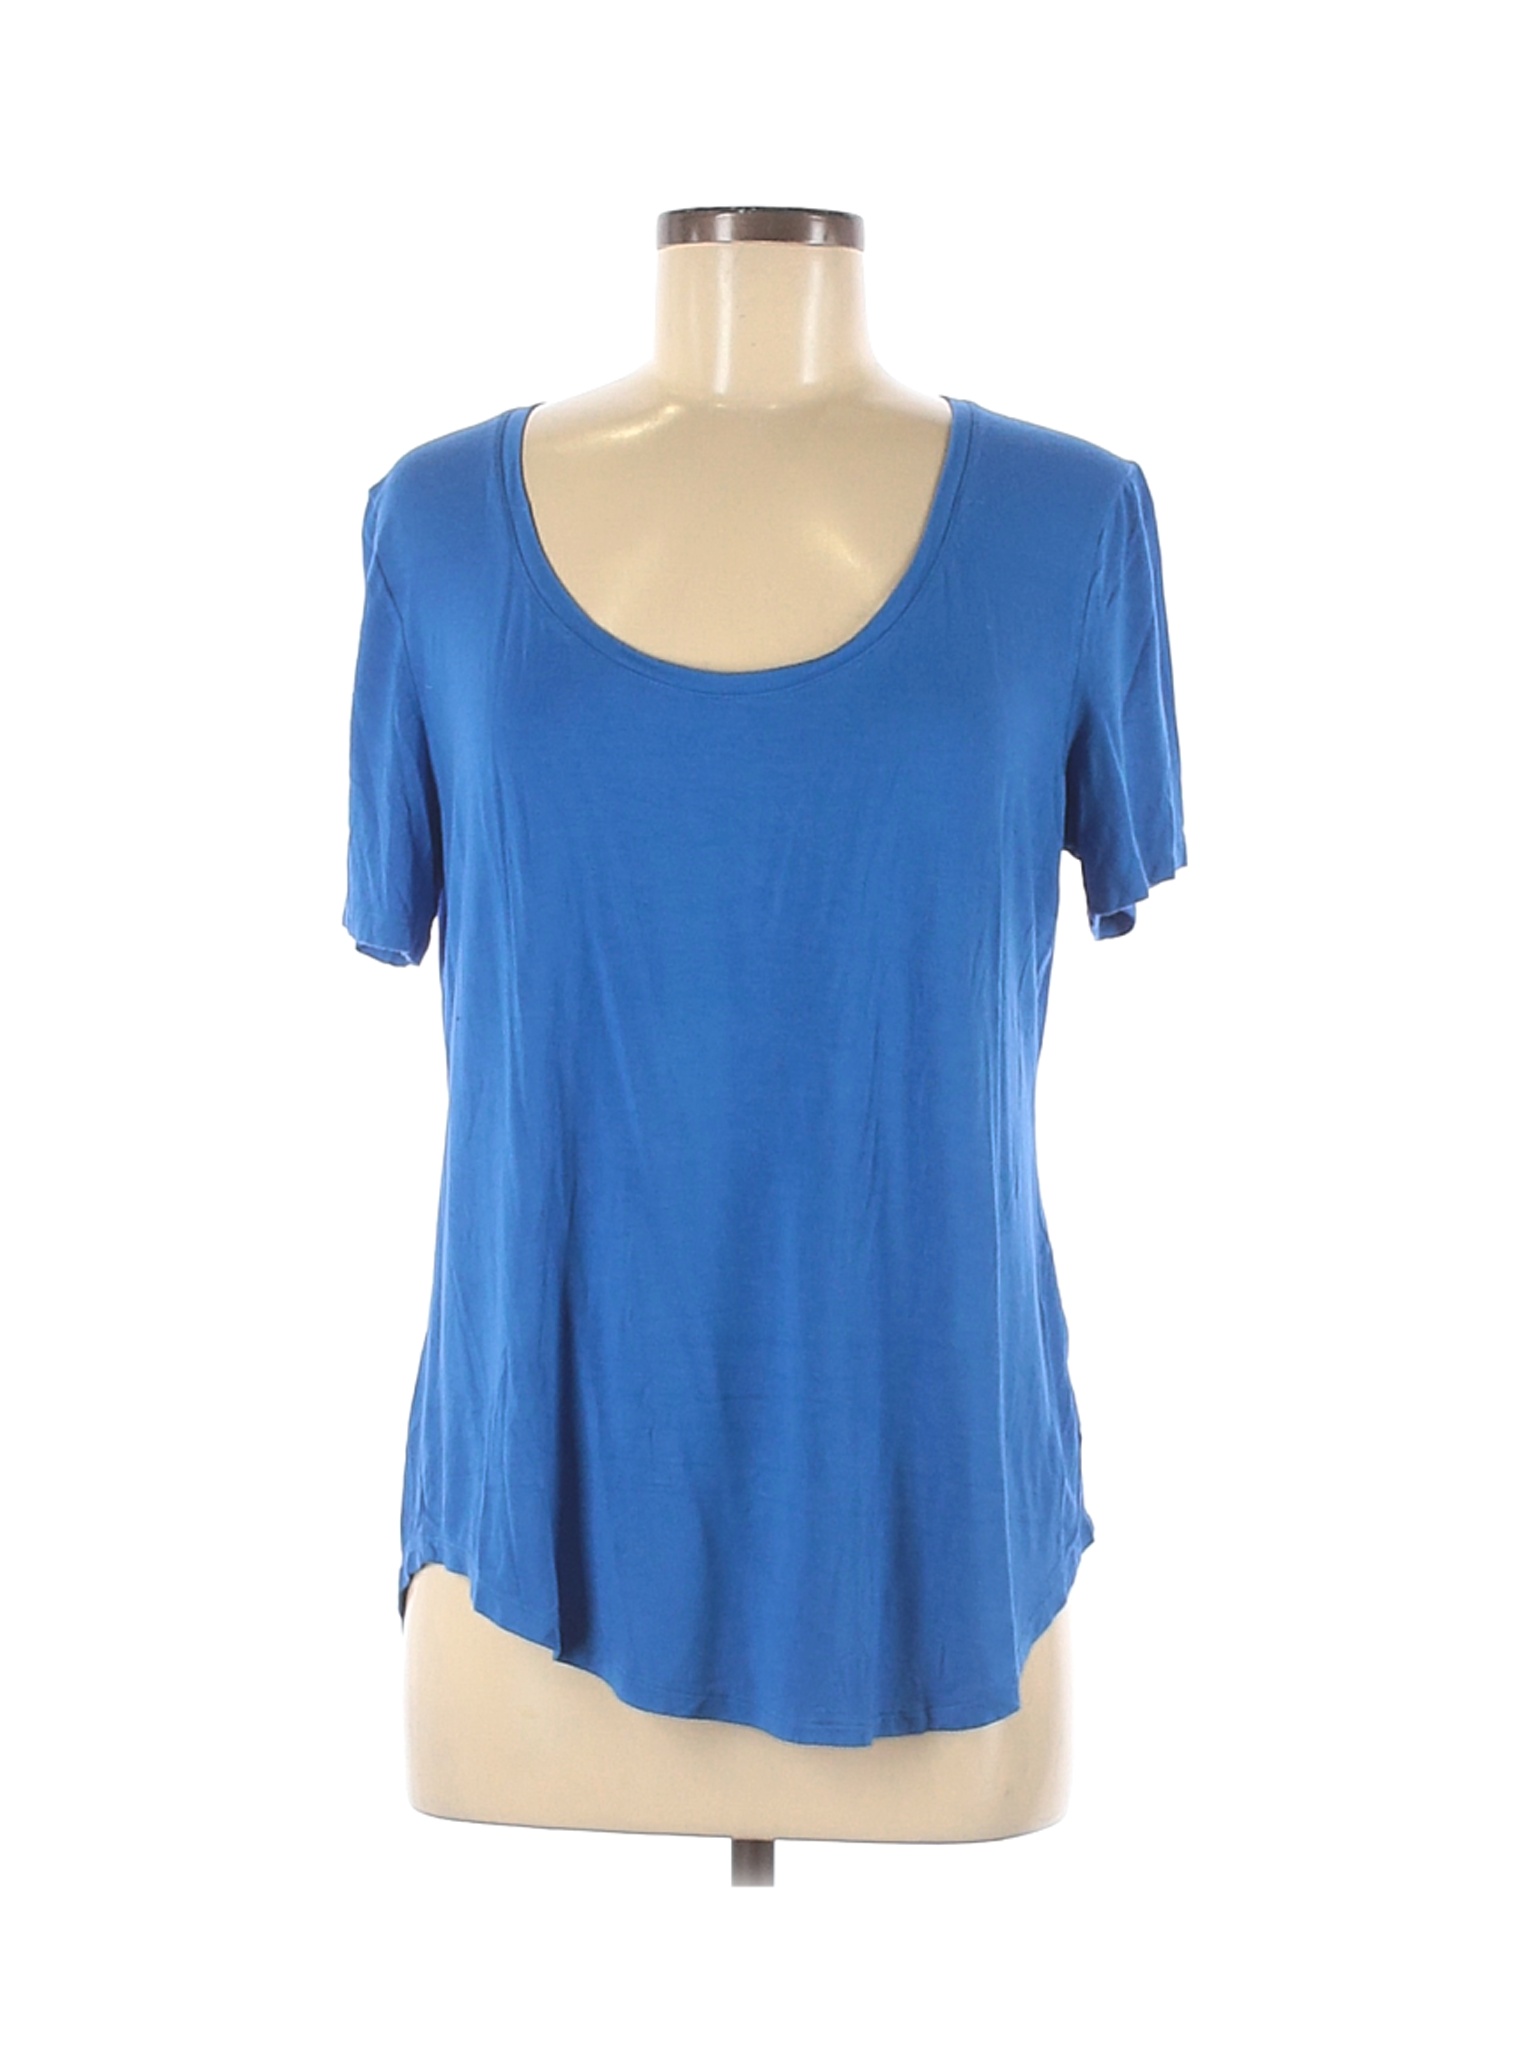 Old Navy Women Blue Short Sleeve T-Shirt M | eBay